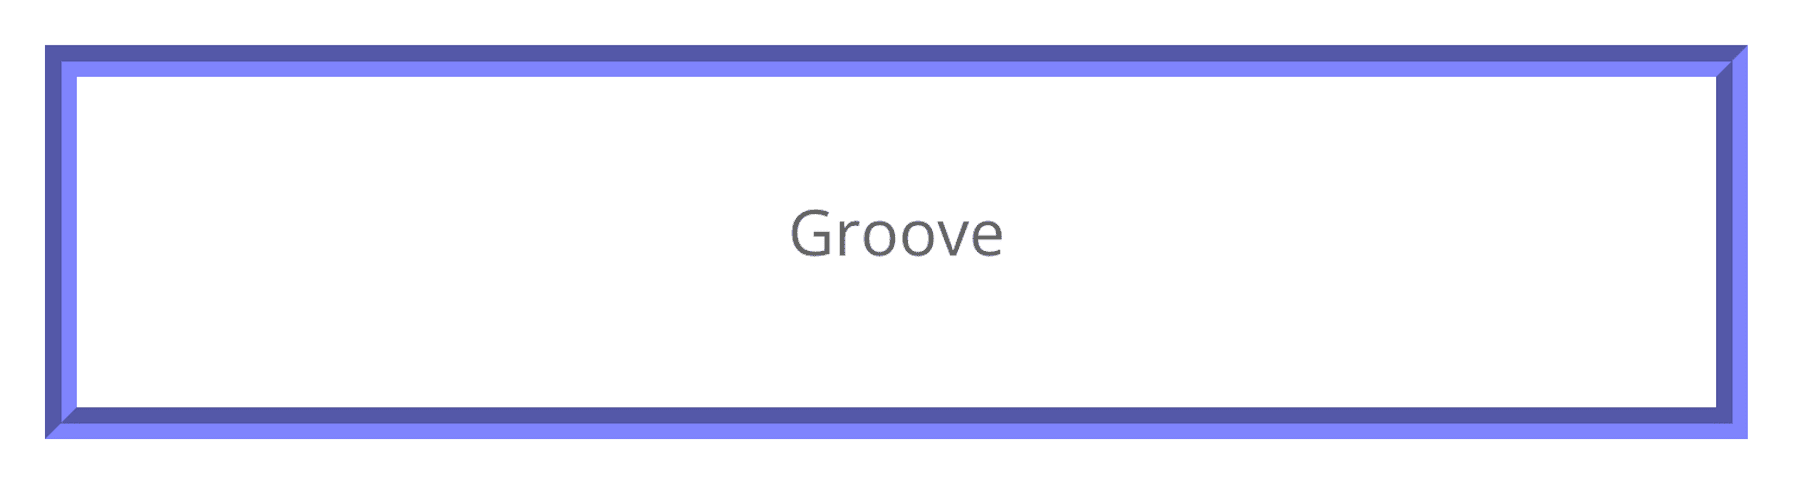 Groove border in Divi Border Options